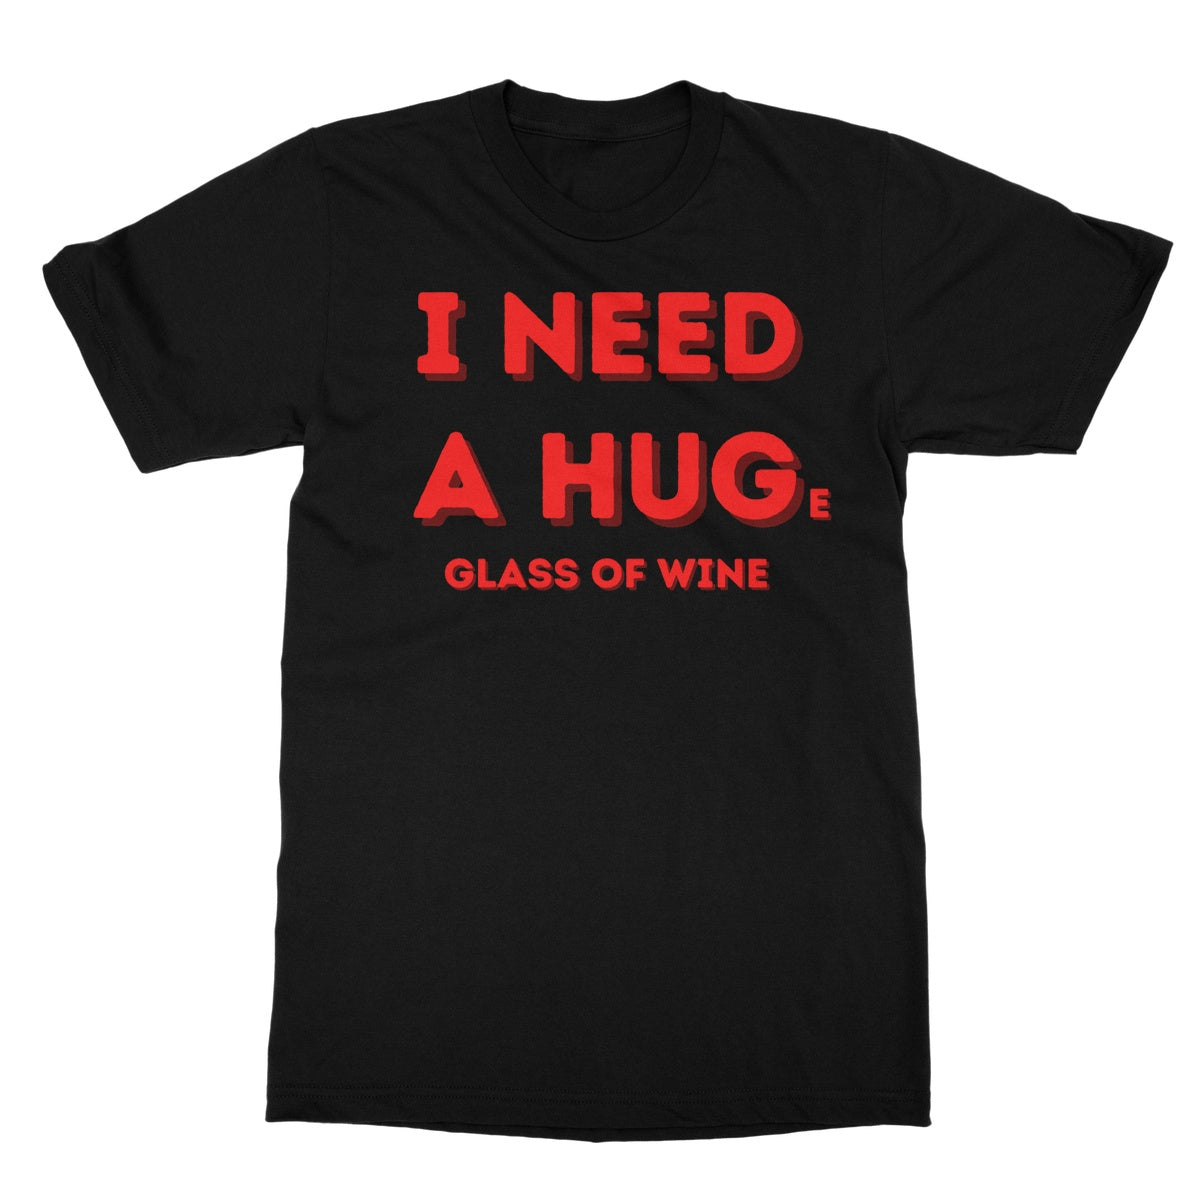 I need a huge glass of wine t shirt black